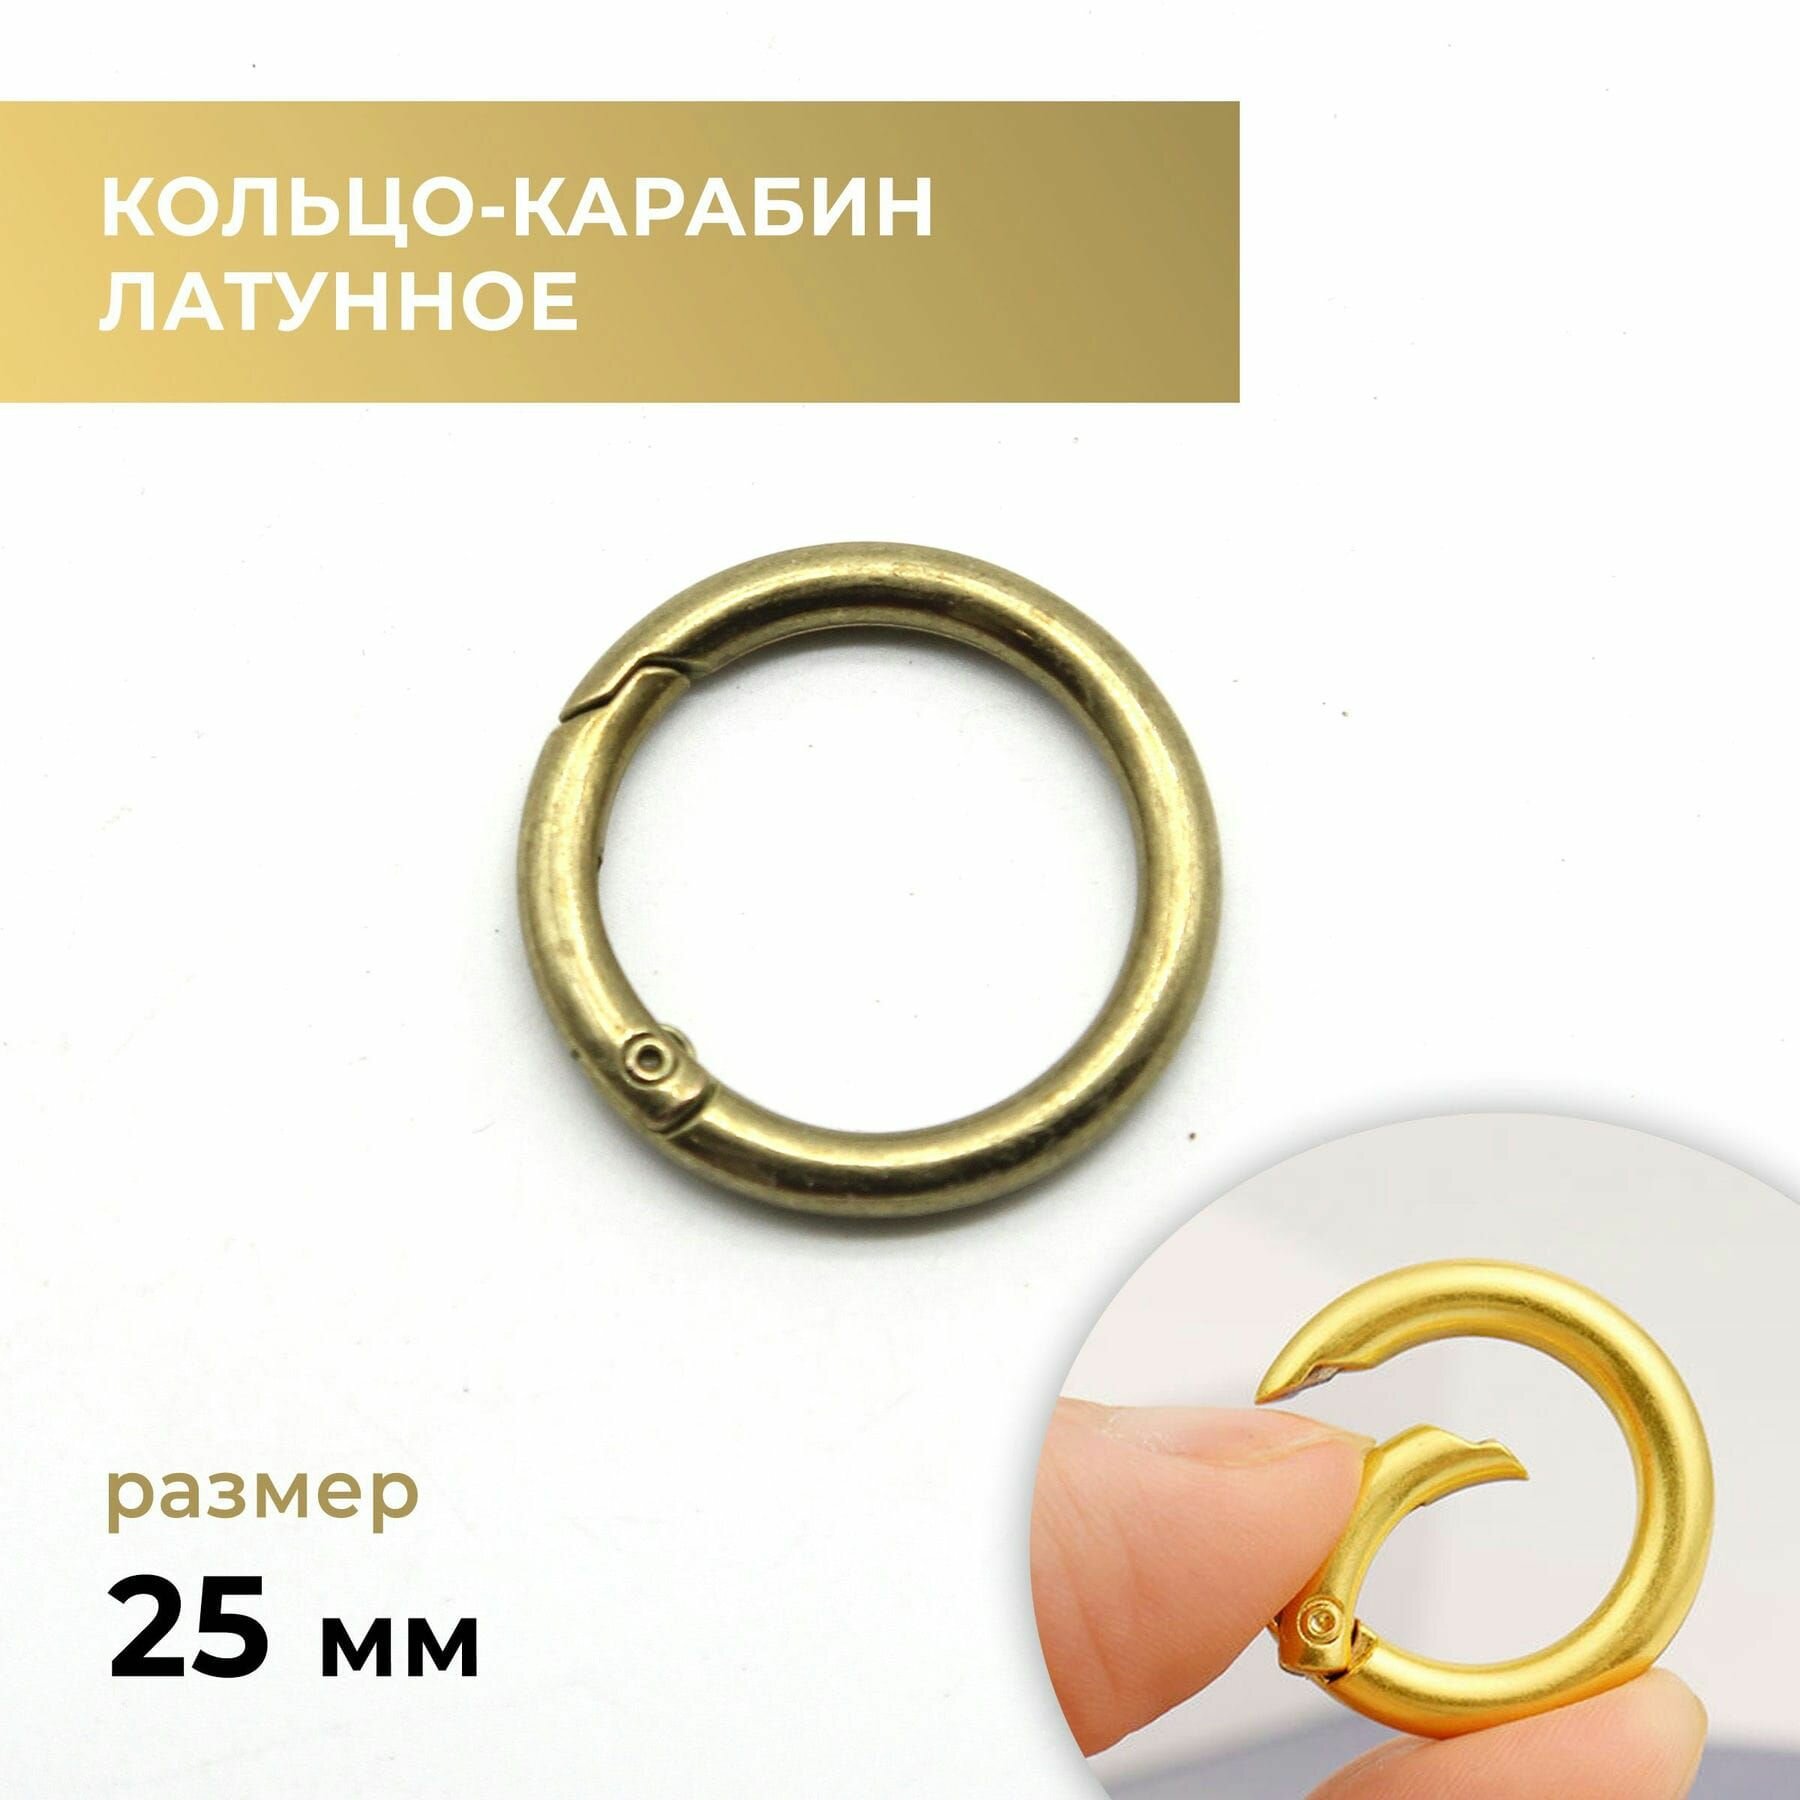 Кольцо-карабин латунное / застежка для сумки, 25 мм